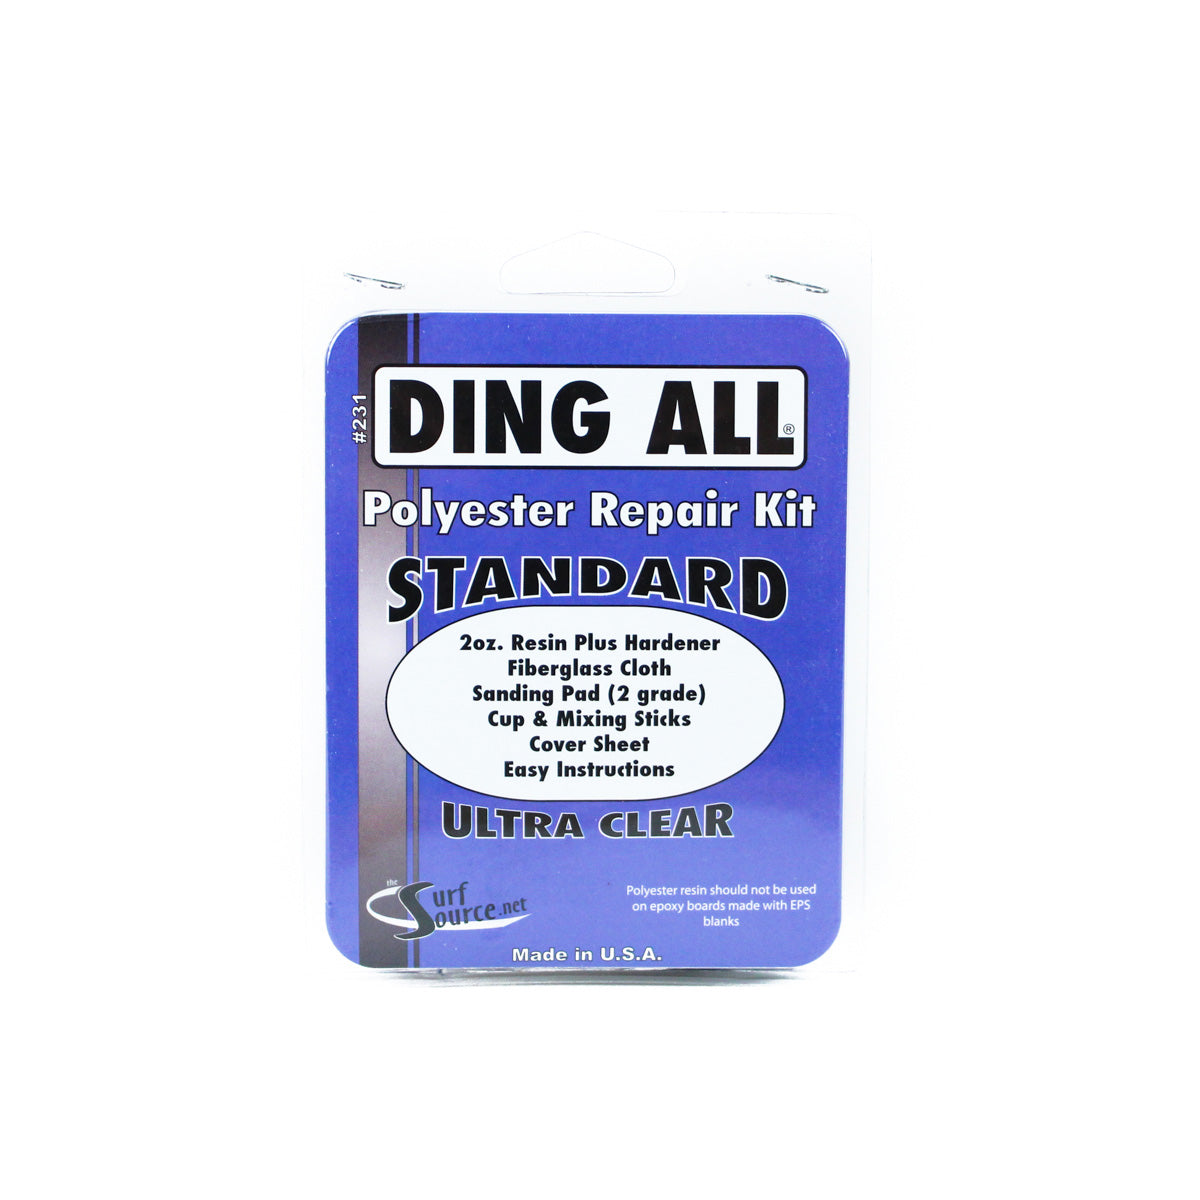 Ding All Polyester Standard Kit